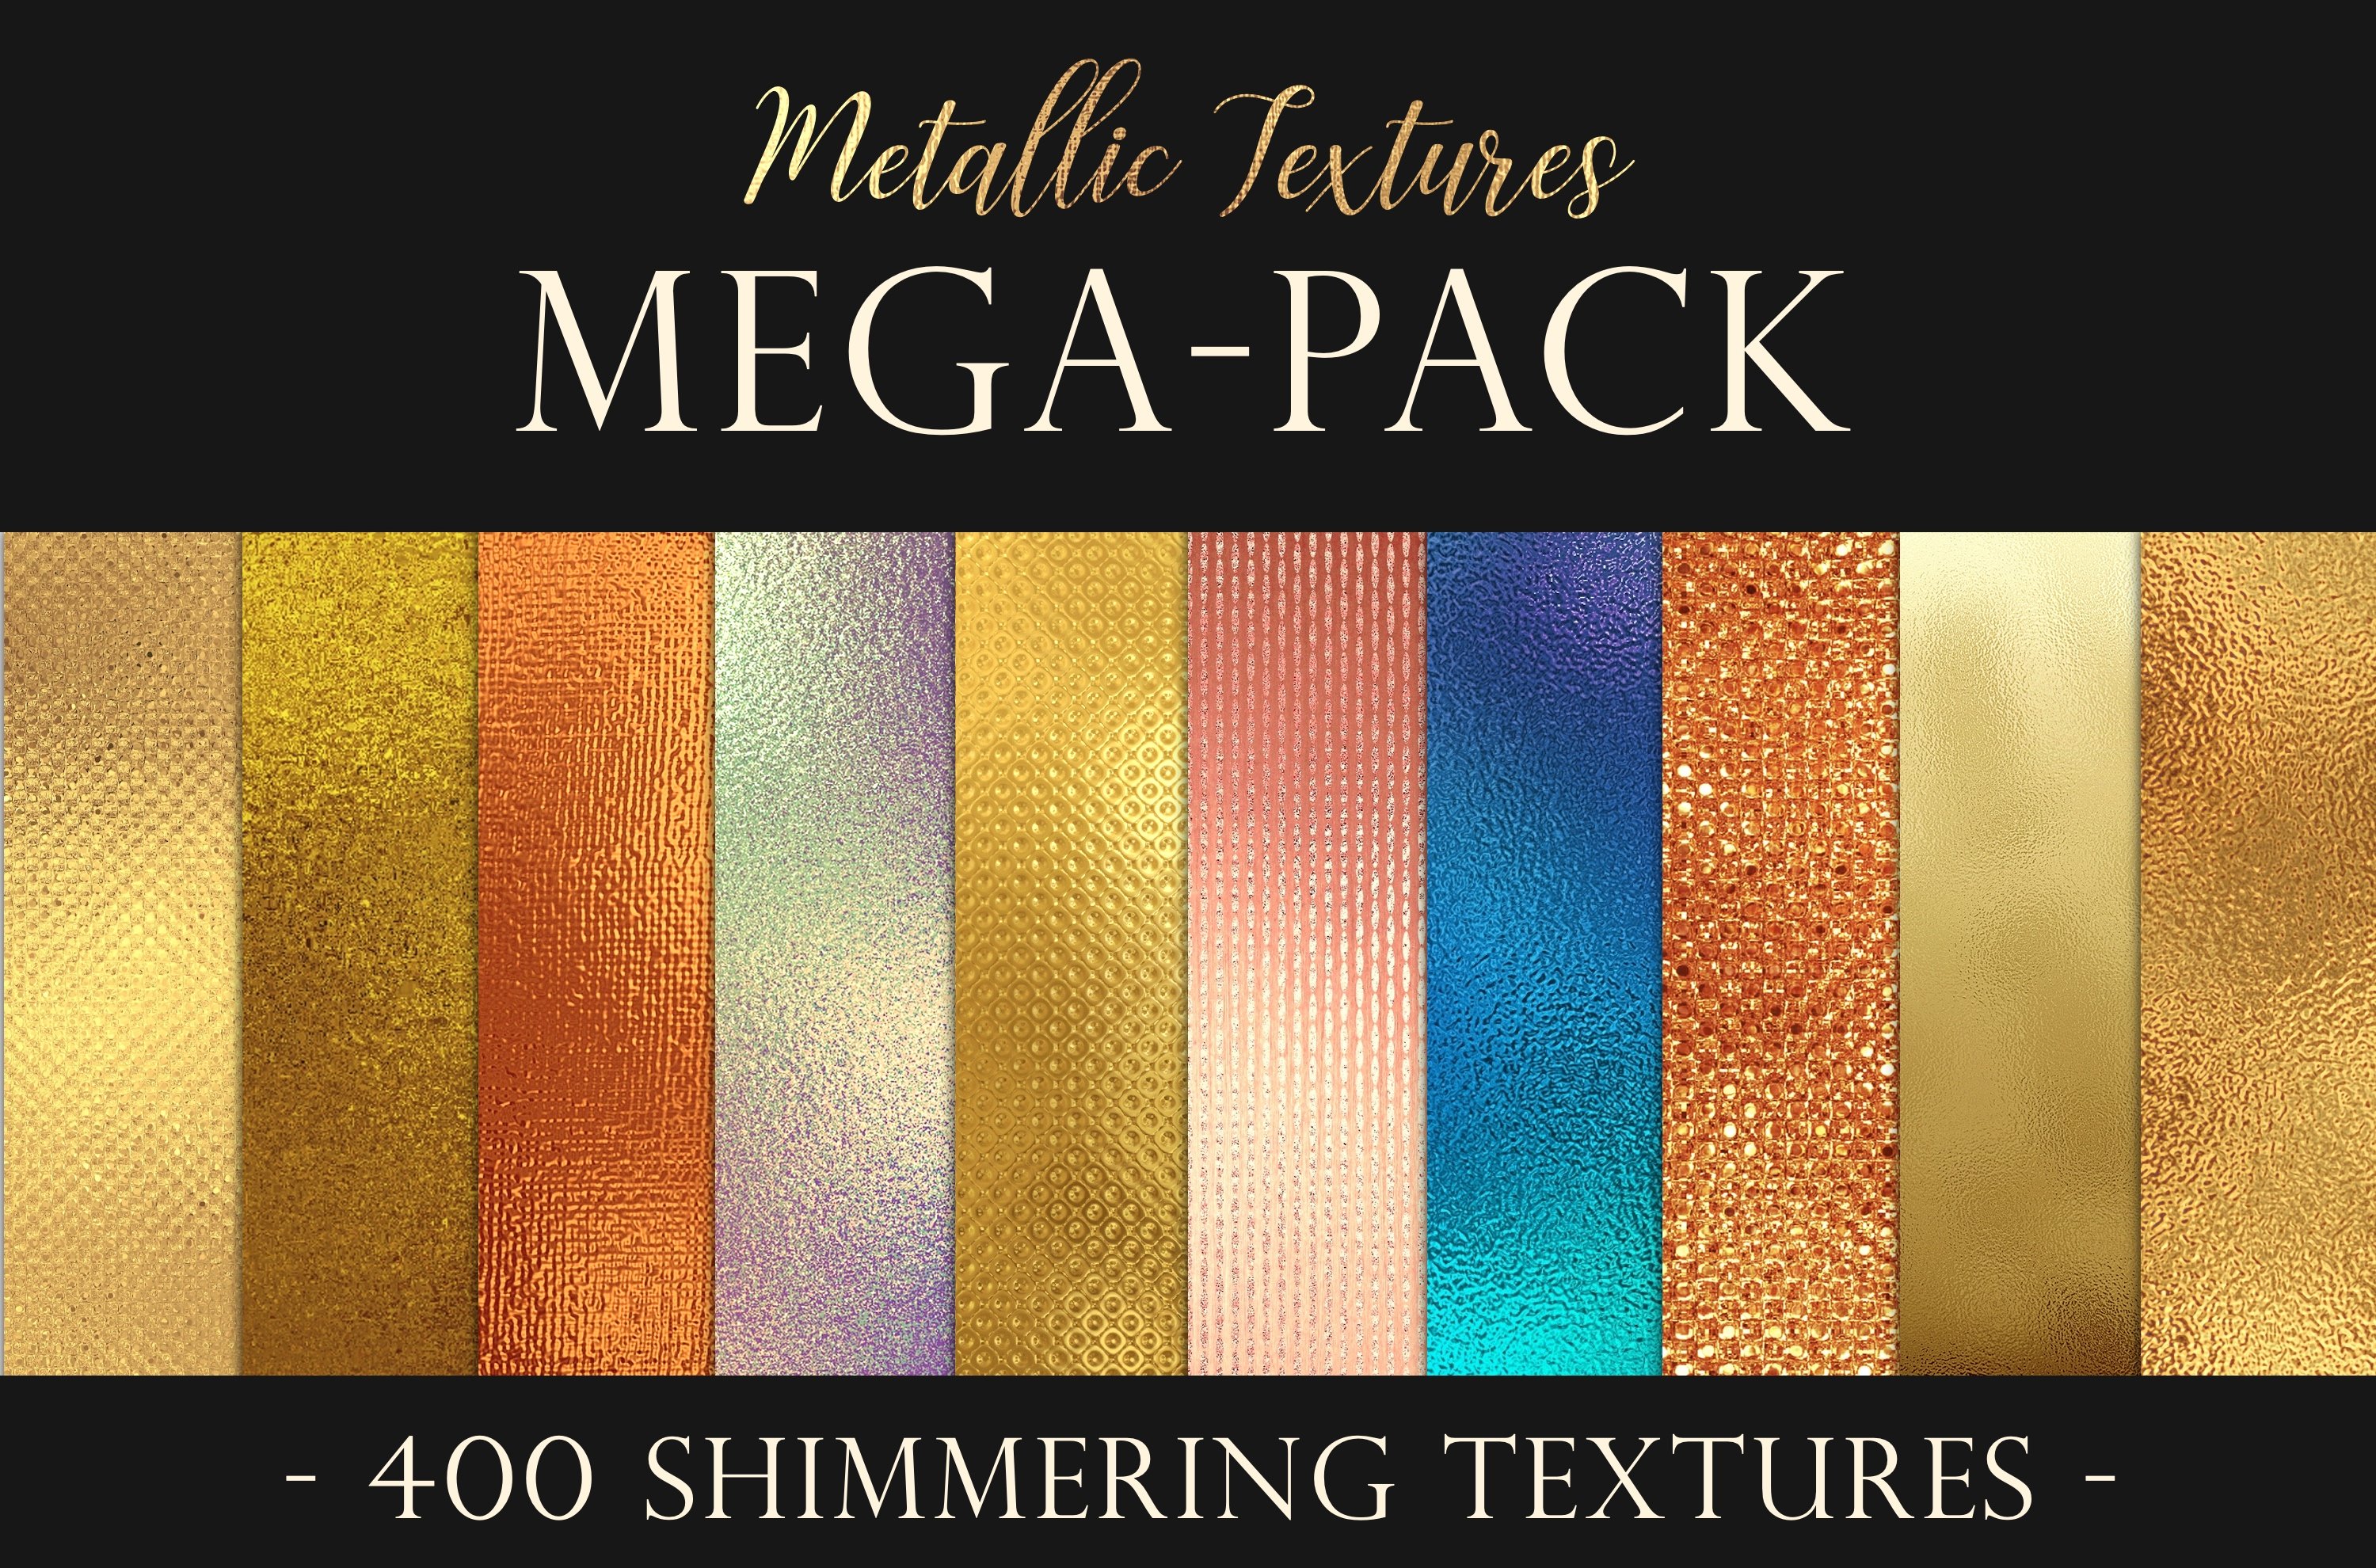 Metallic Textures Bundle cover image.